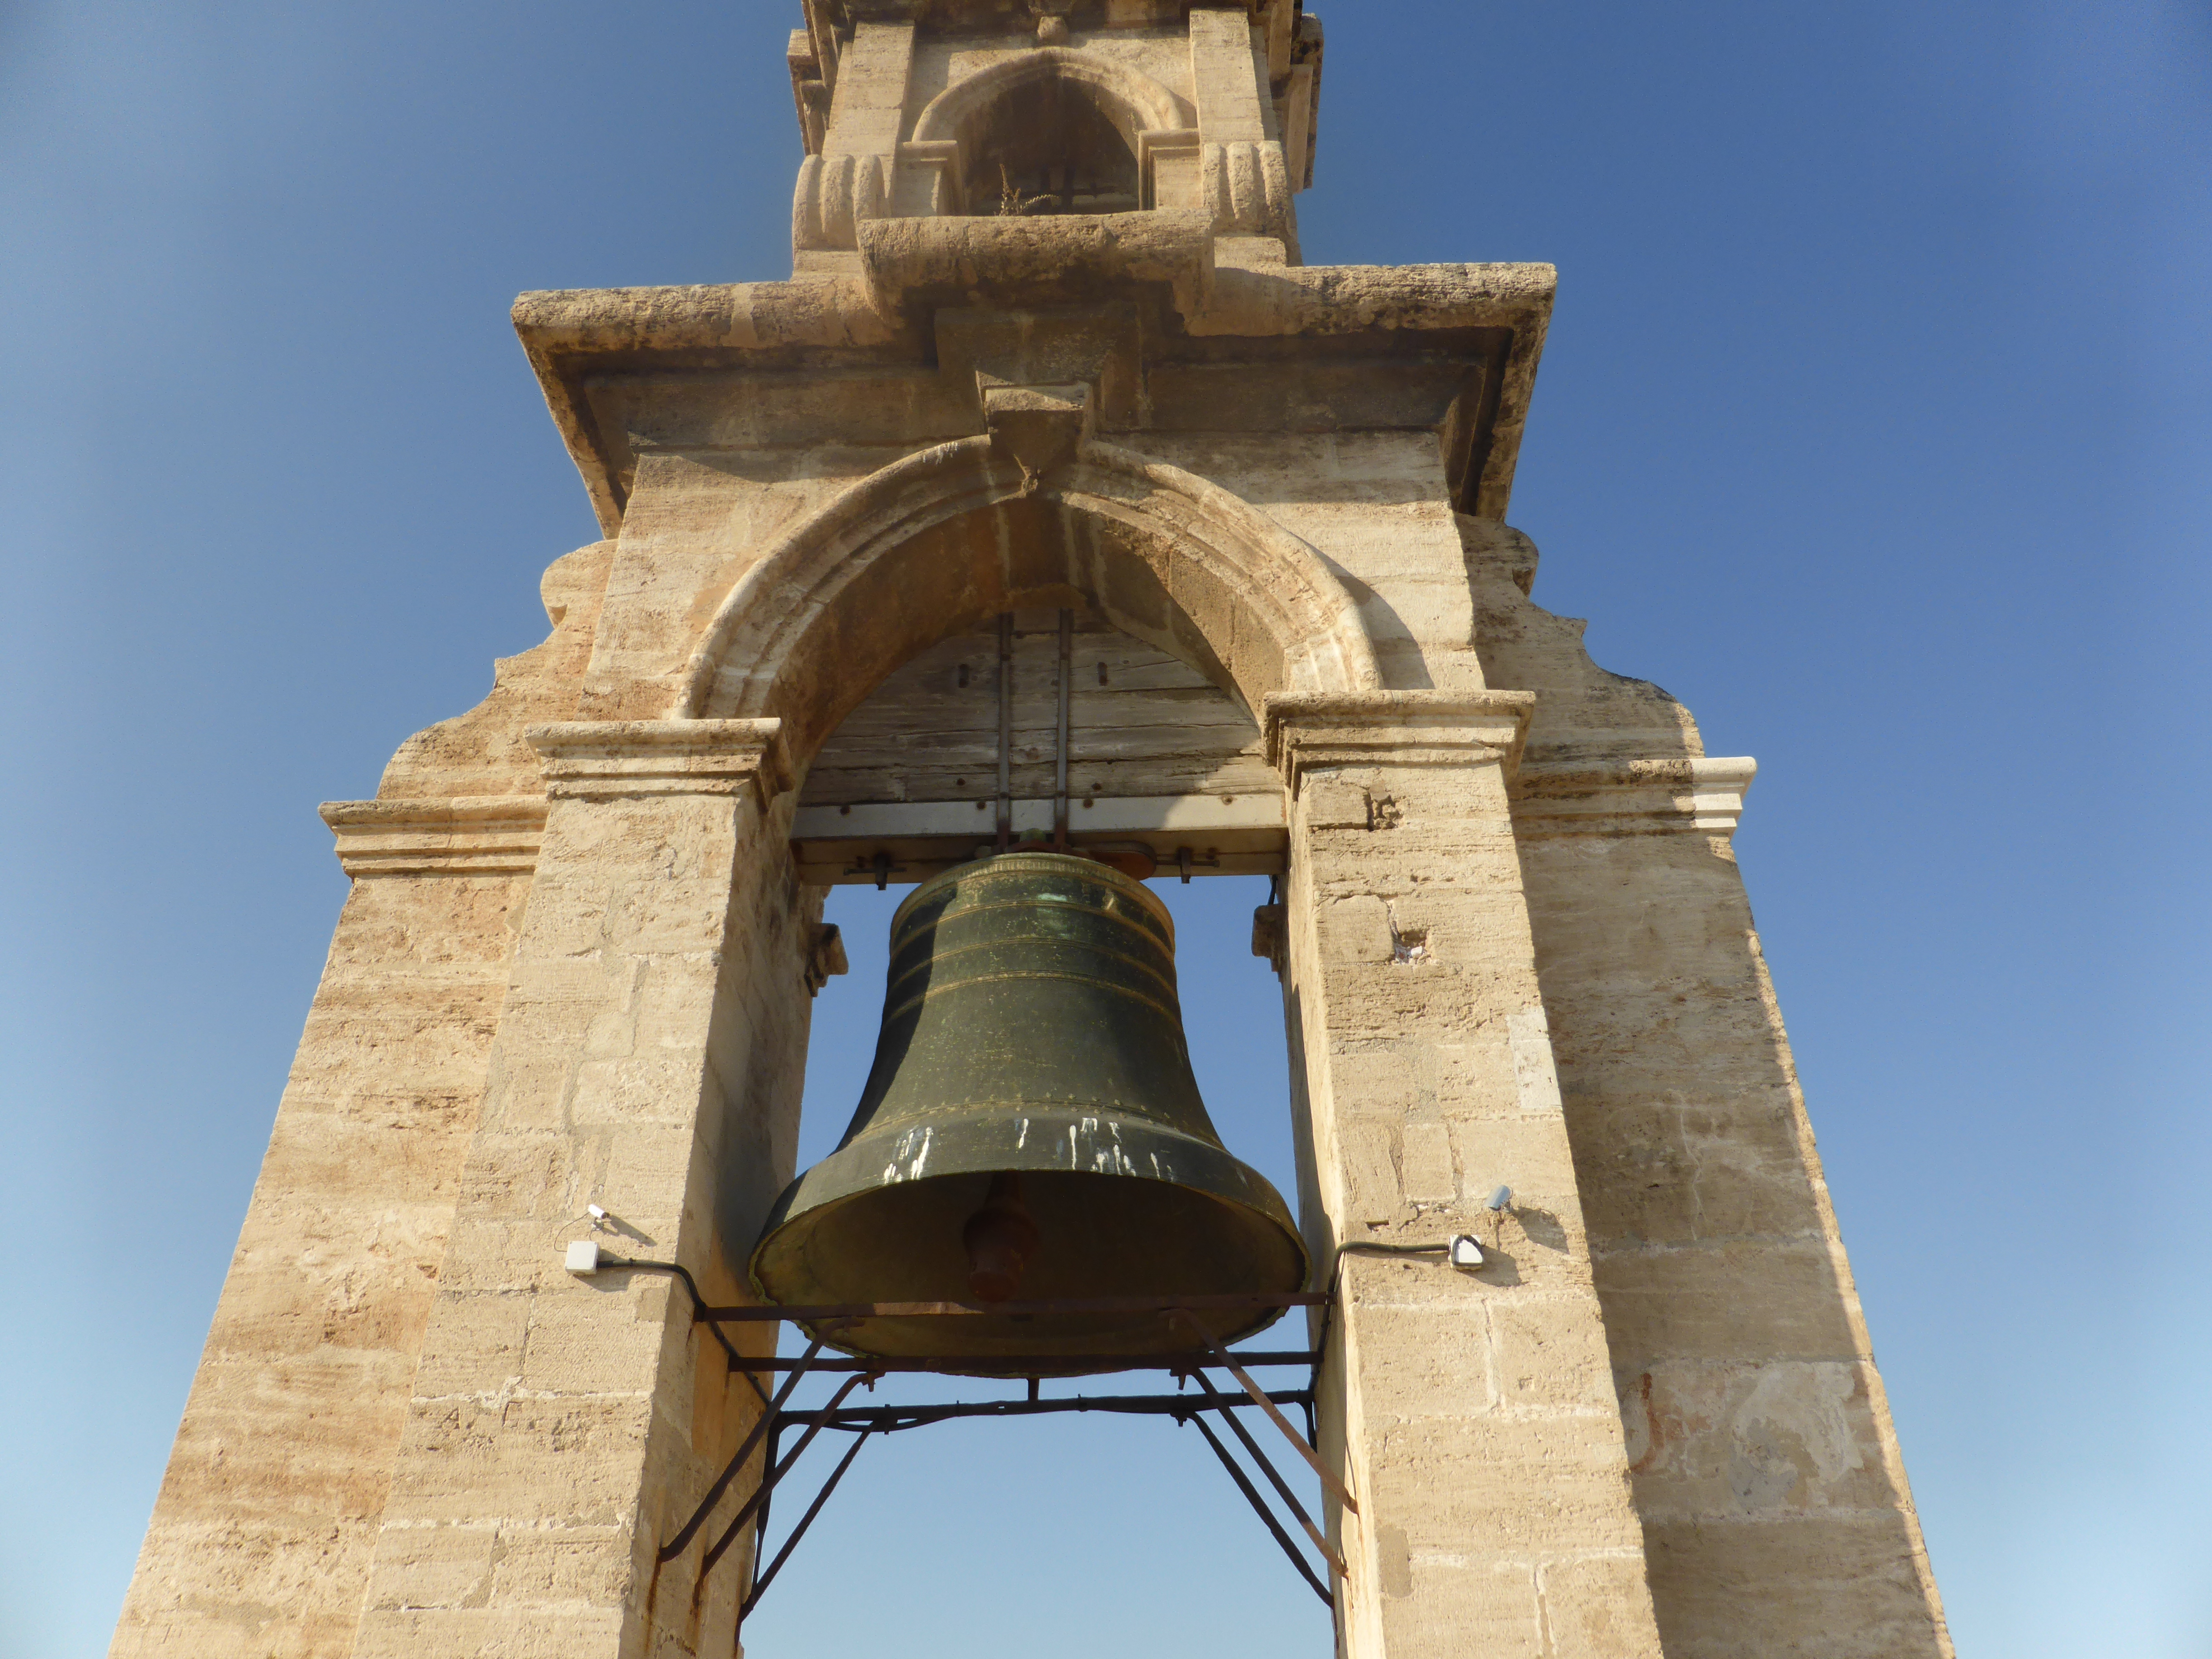 башня колокольня